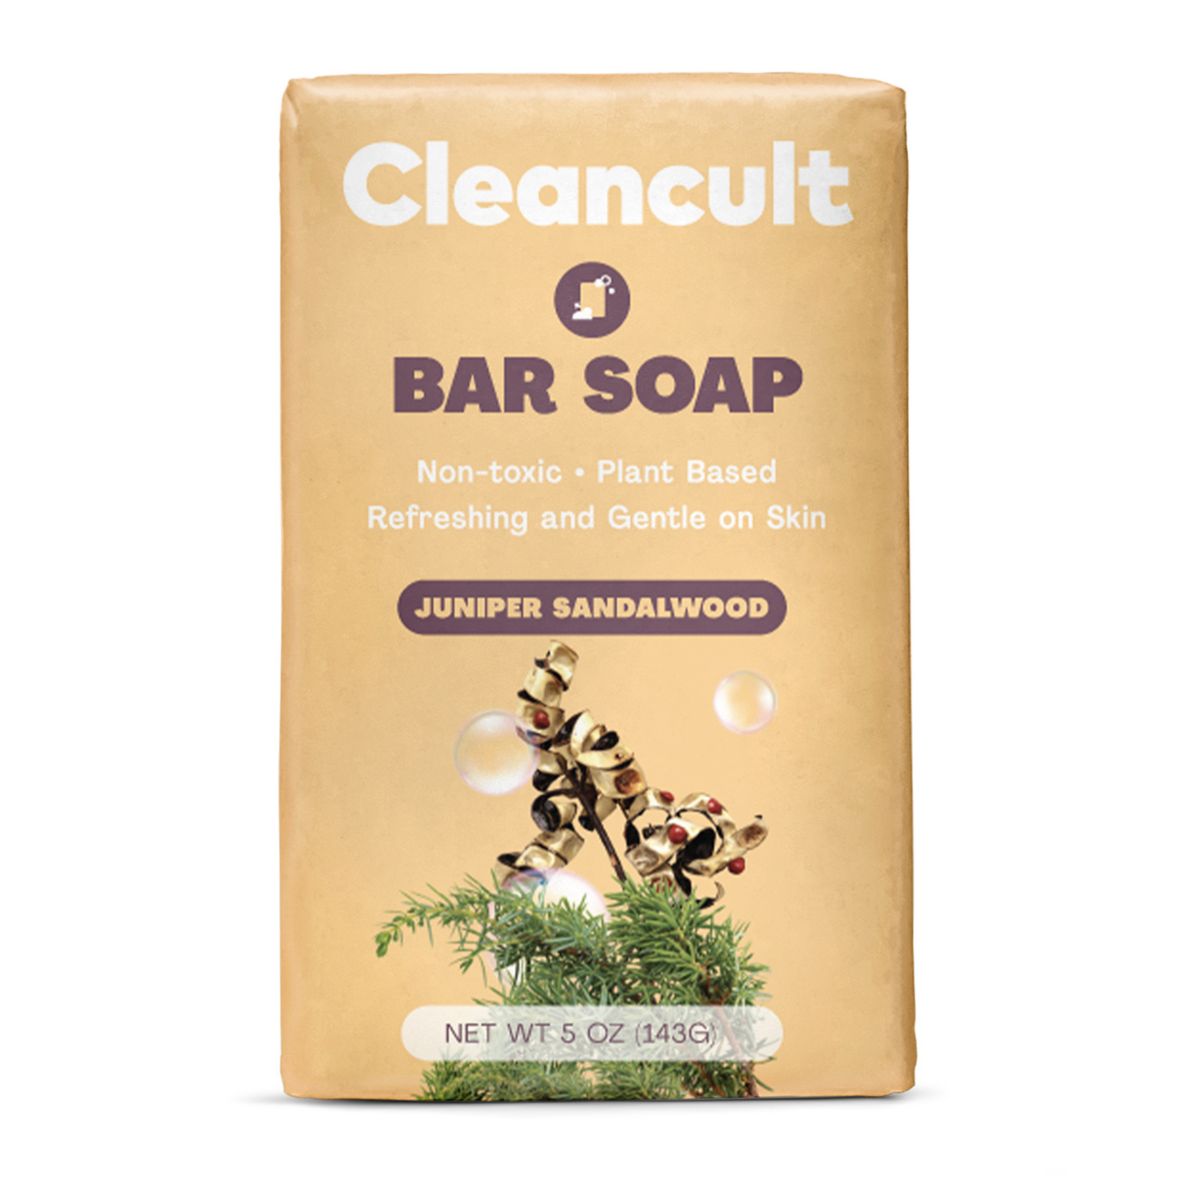 cleancult Bar Soap - Juniper Sandalwood Cleancult